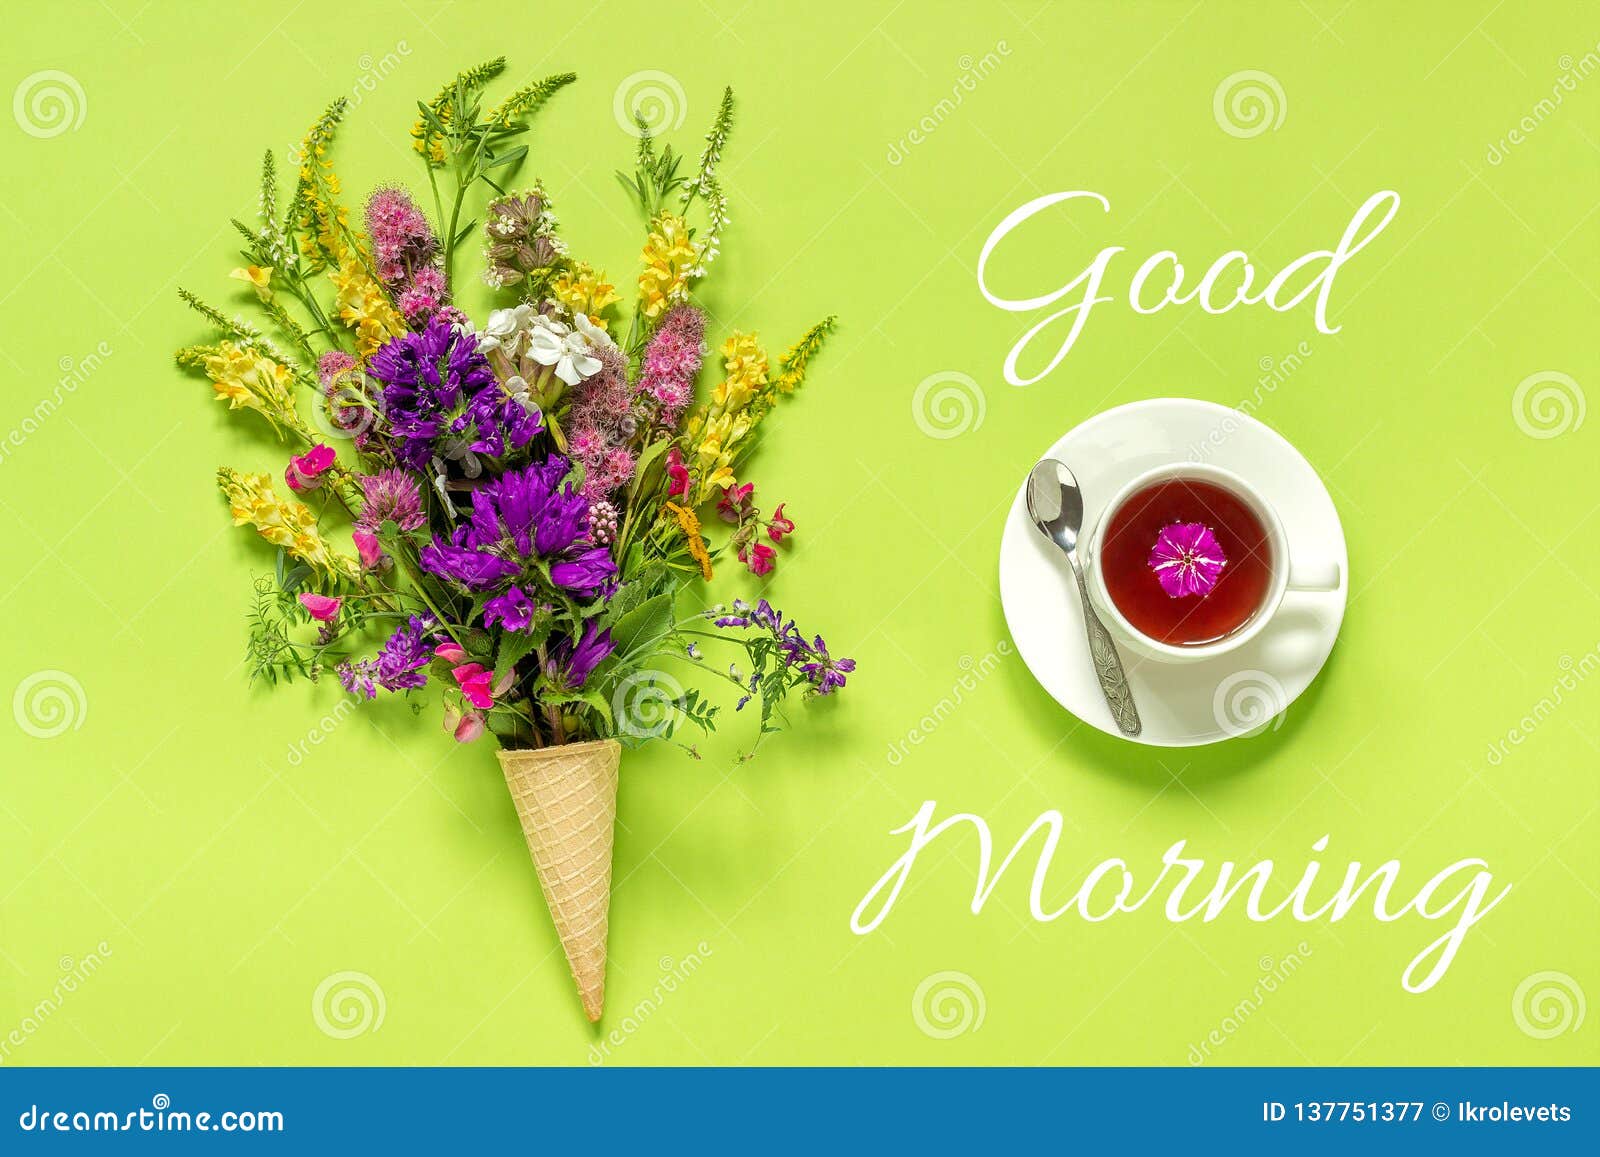 Good Morning Paper Green Tea Cup Stock Photos - Free & Royalty ...